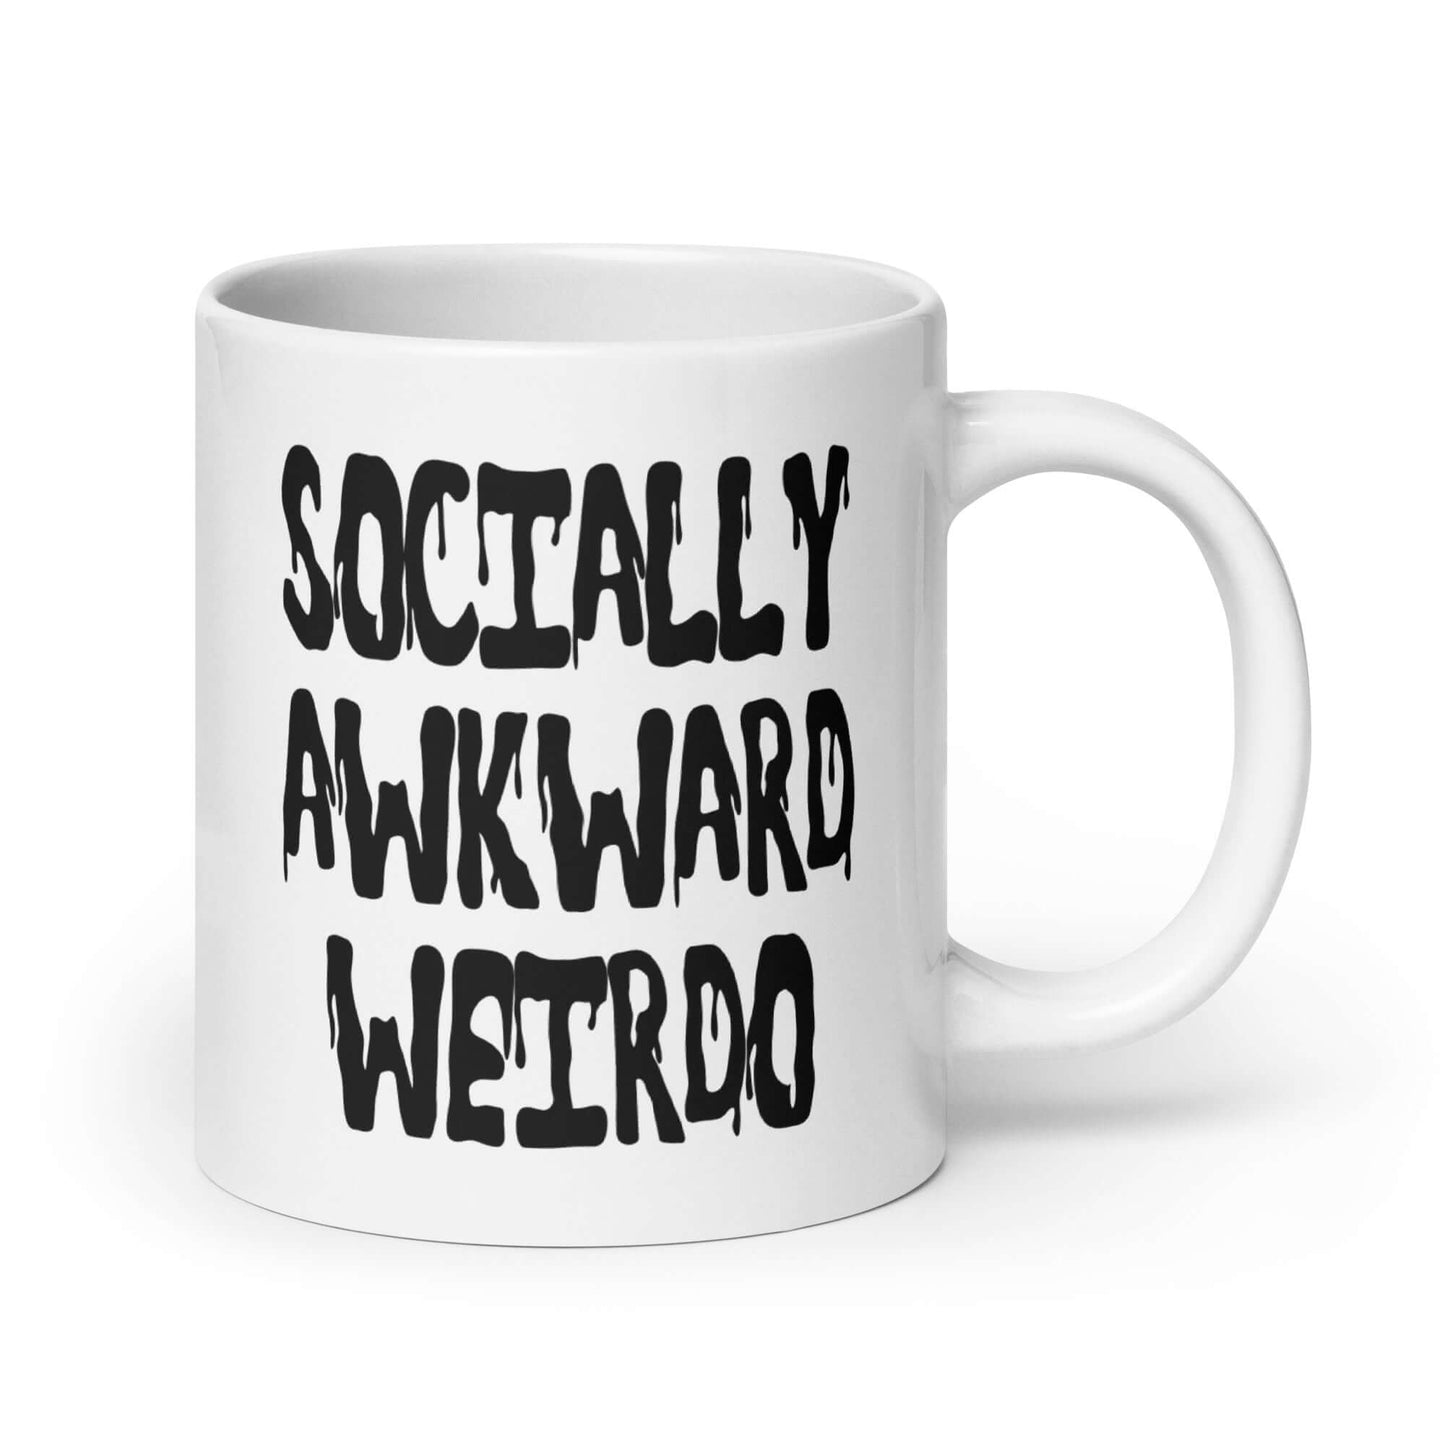 Socially awkward weirdo mug